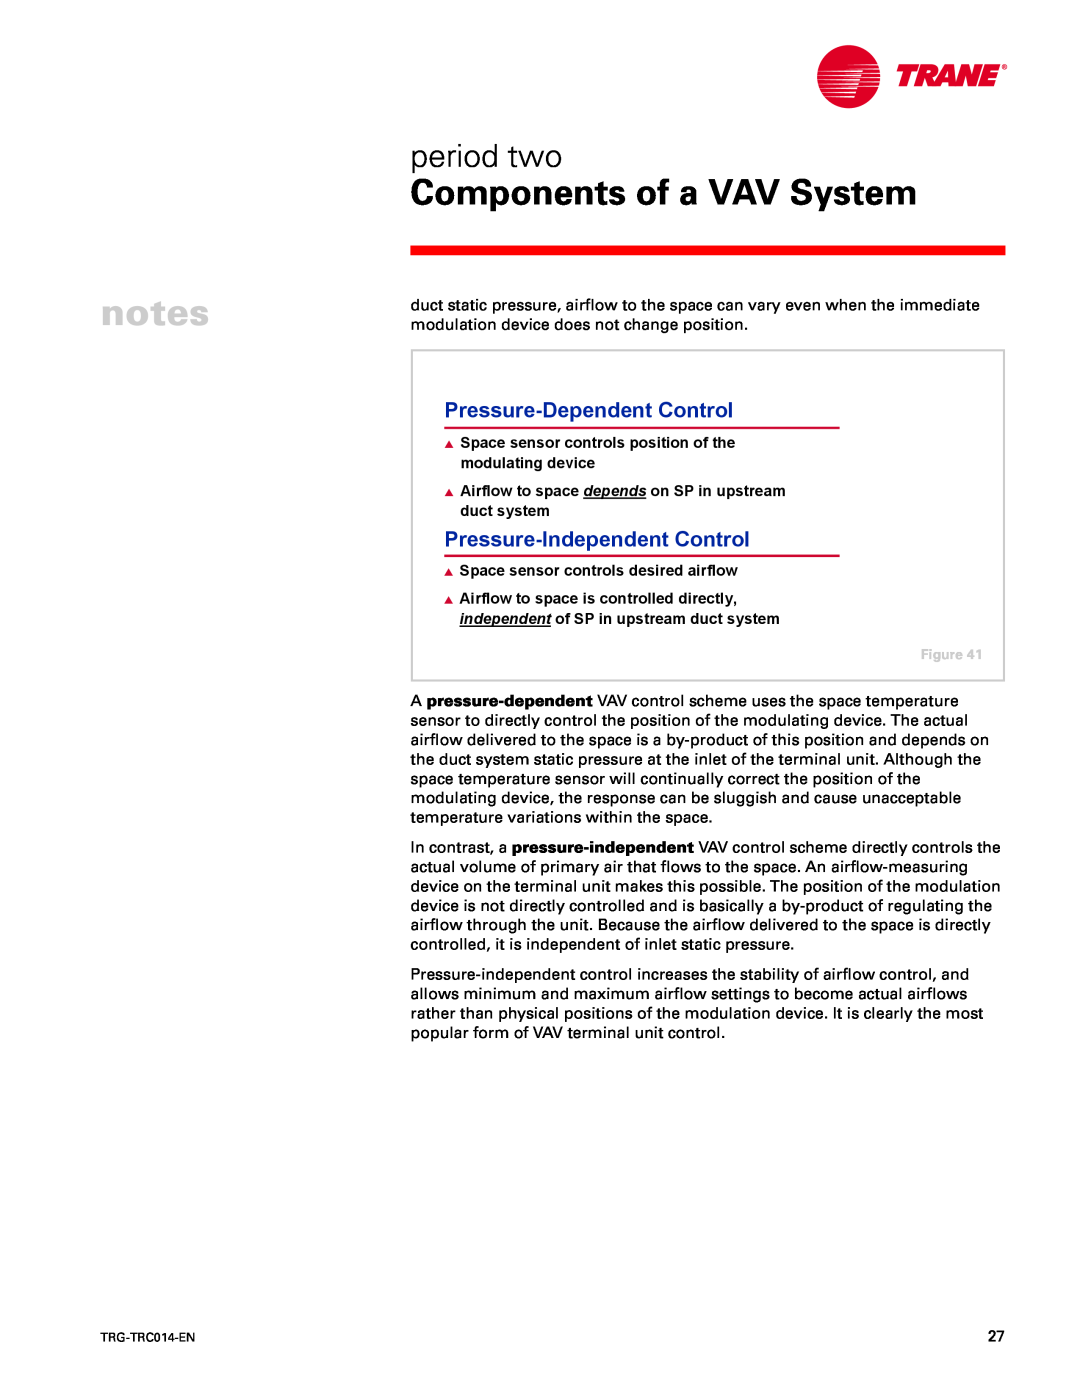 Trane TRG-TRC014-EN manual Pressure-DependentControl, Pressure-IndependentControl, Components of a VAV System, period two 